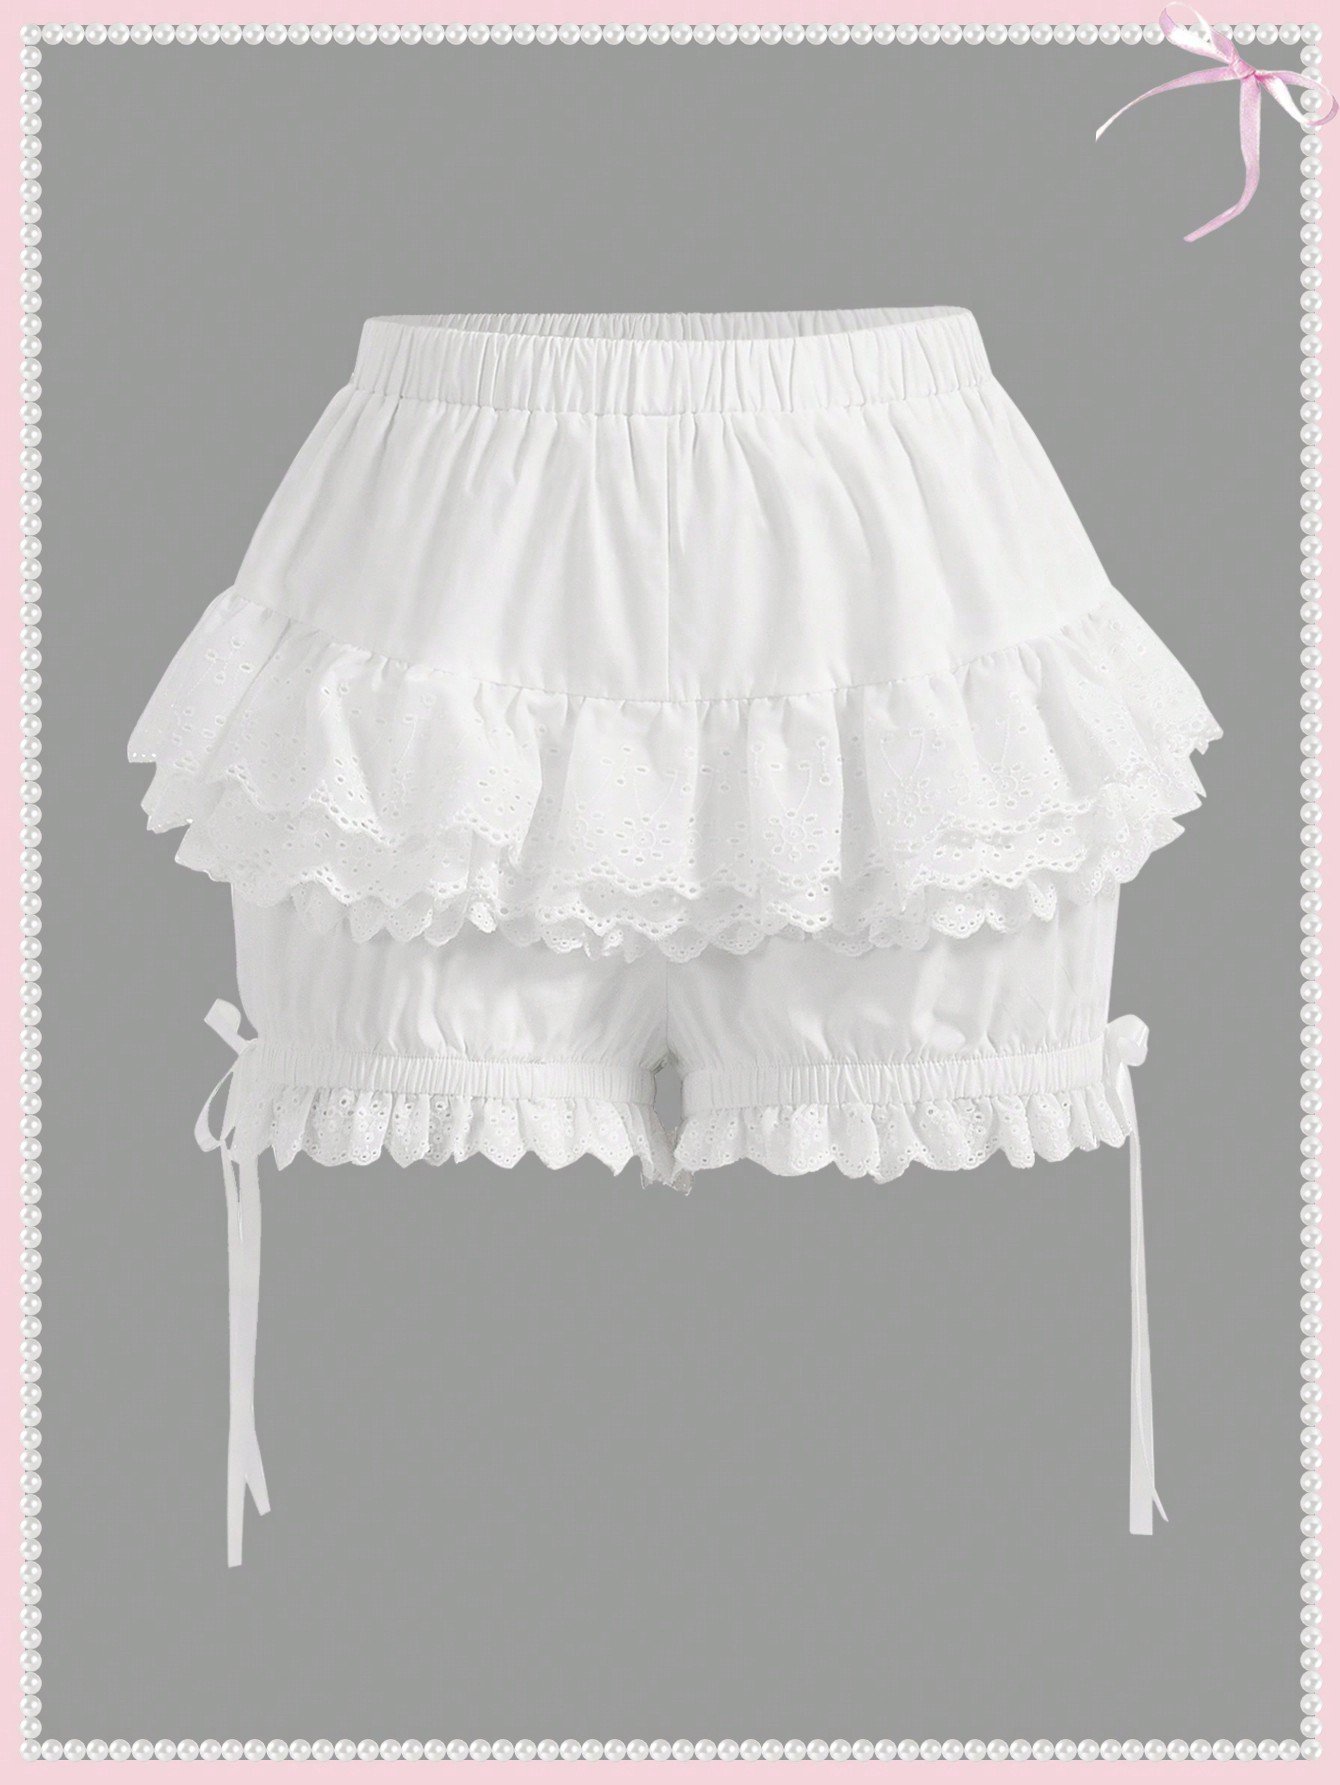 SHEIN Neu リボン 花柄 レース ハイウエスト ショートパンツ 白色 パーティー ステージ衣装